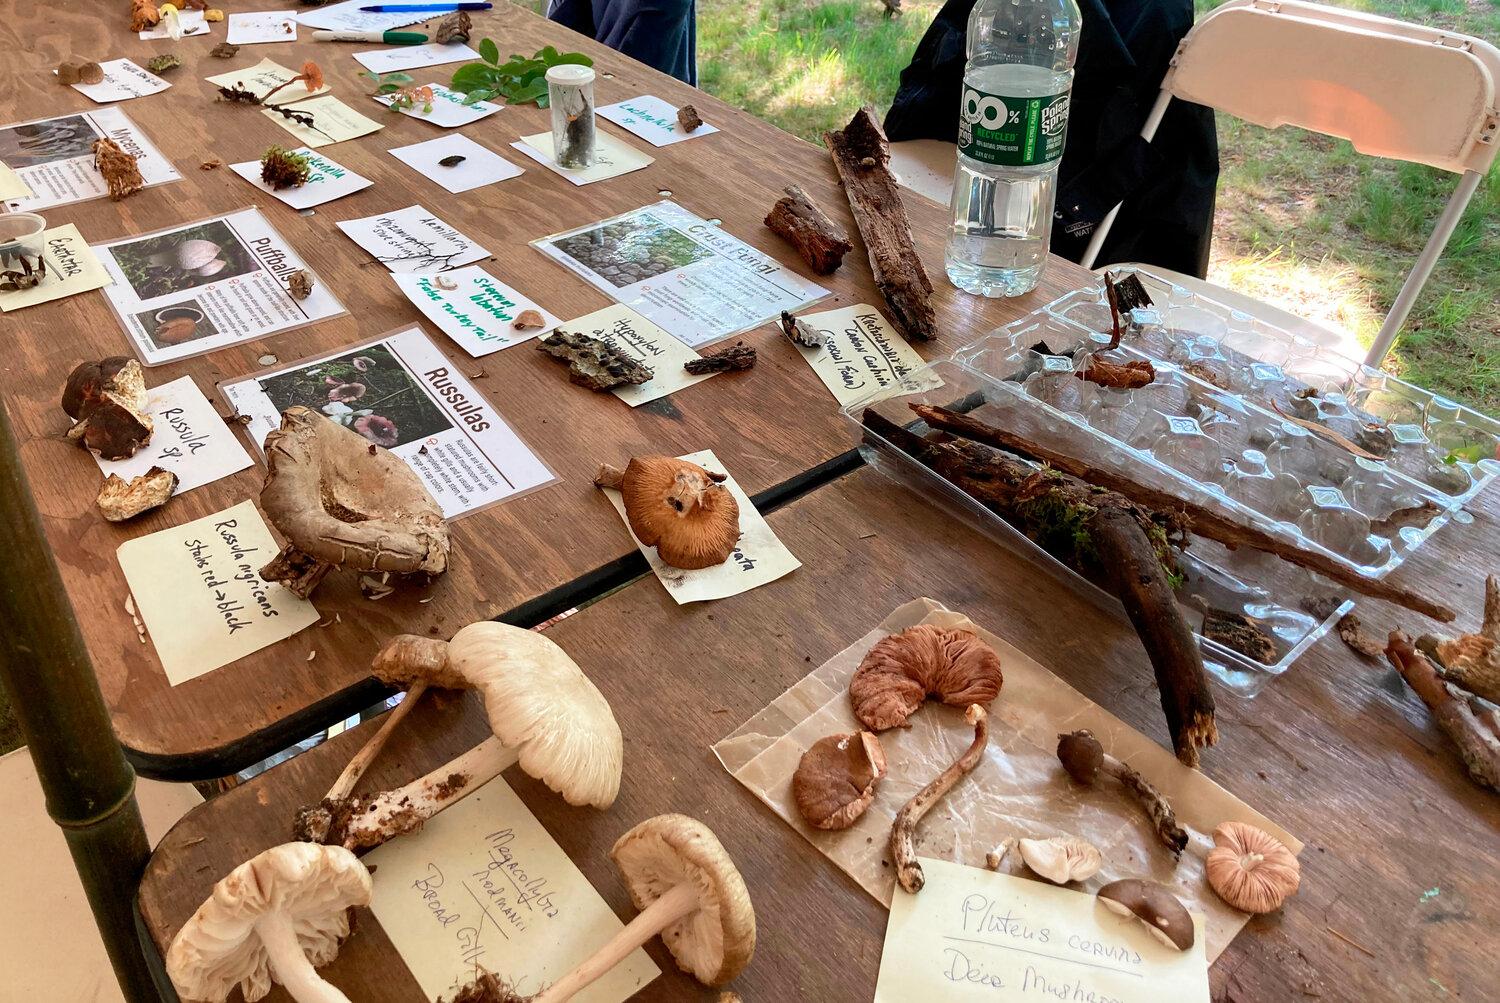 Mushrooms identified by the fungi team